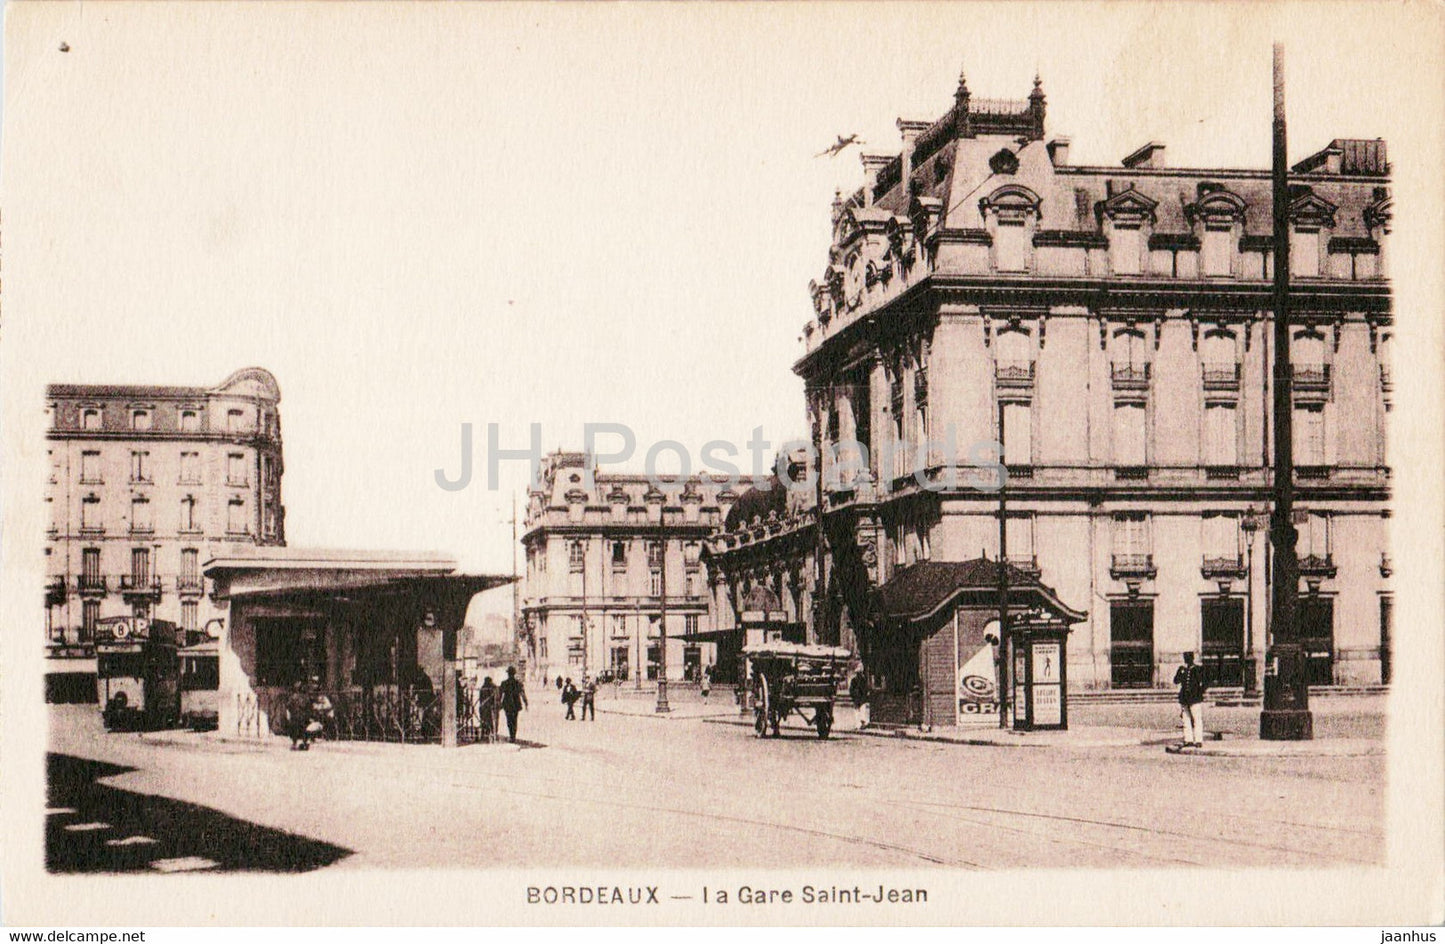 Bordeaux - La Gare Saint Jean - old postcard - France - unused - JH Postcards